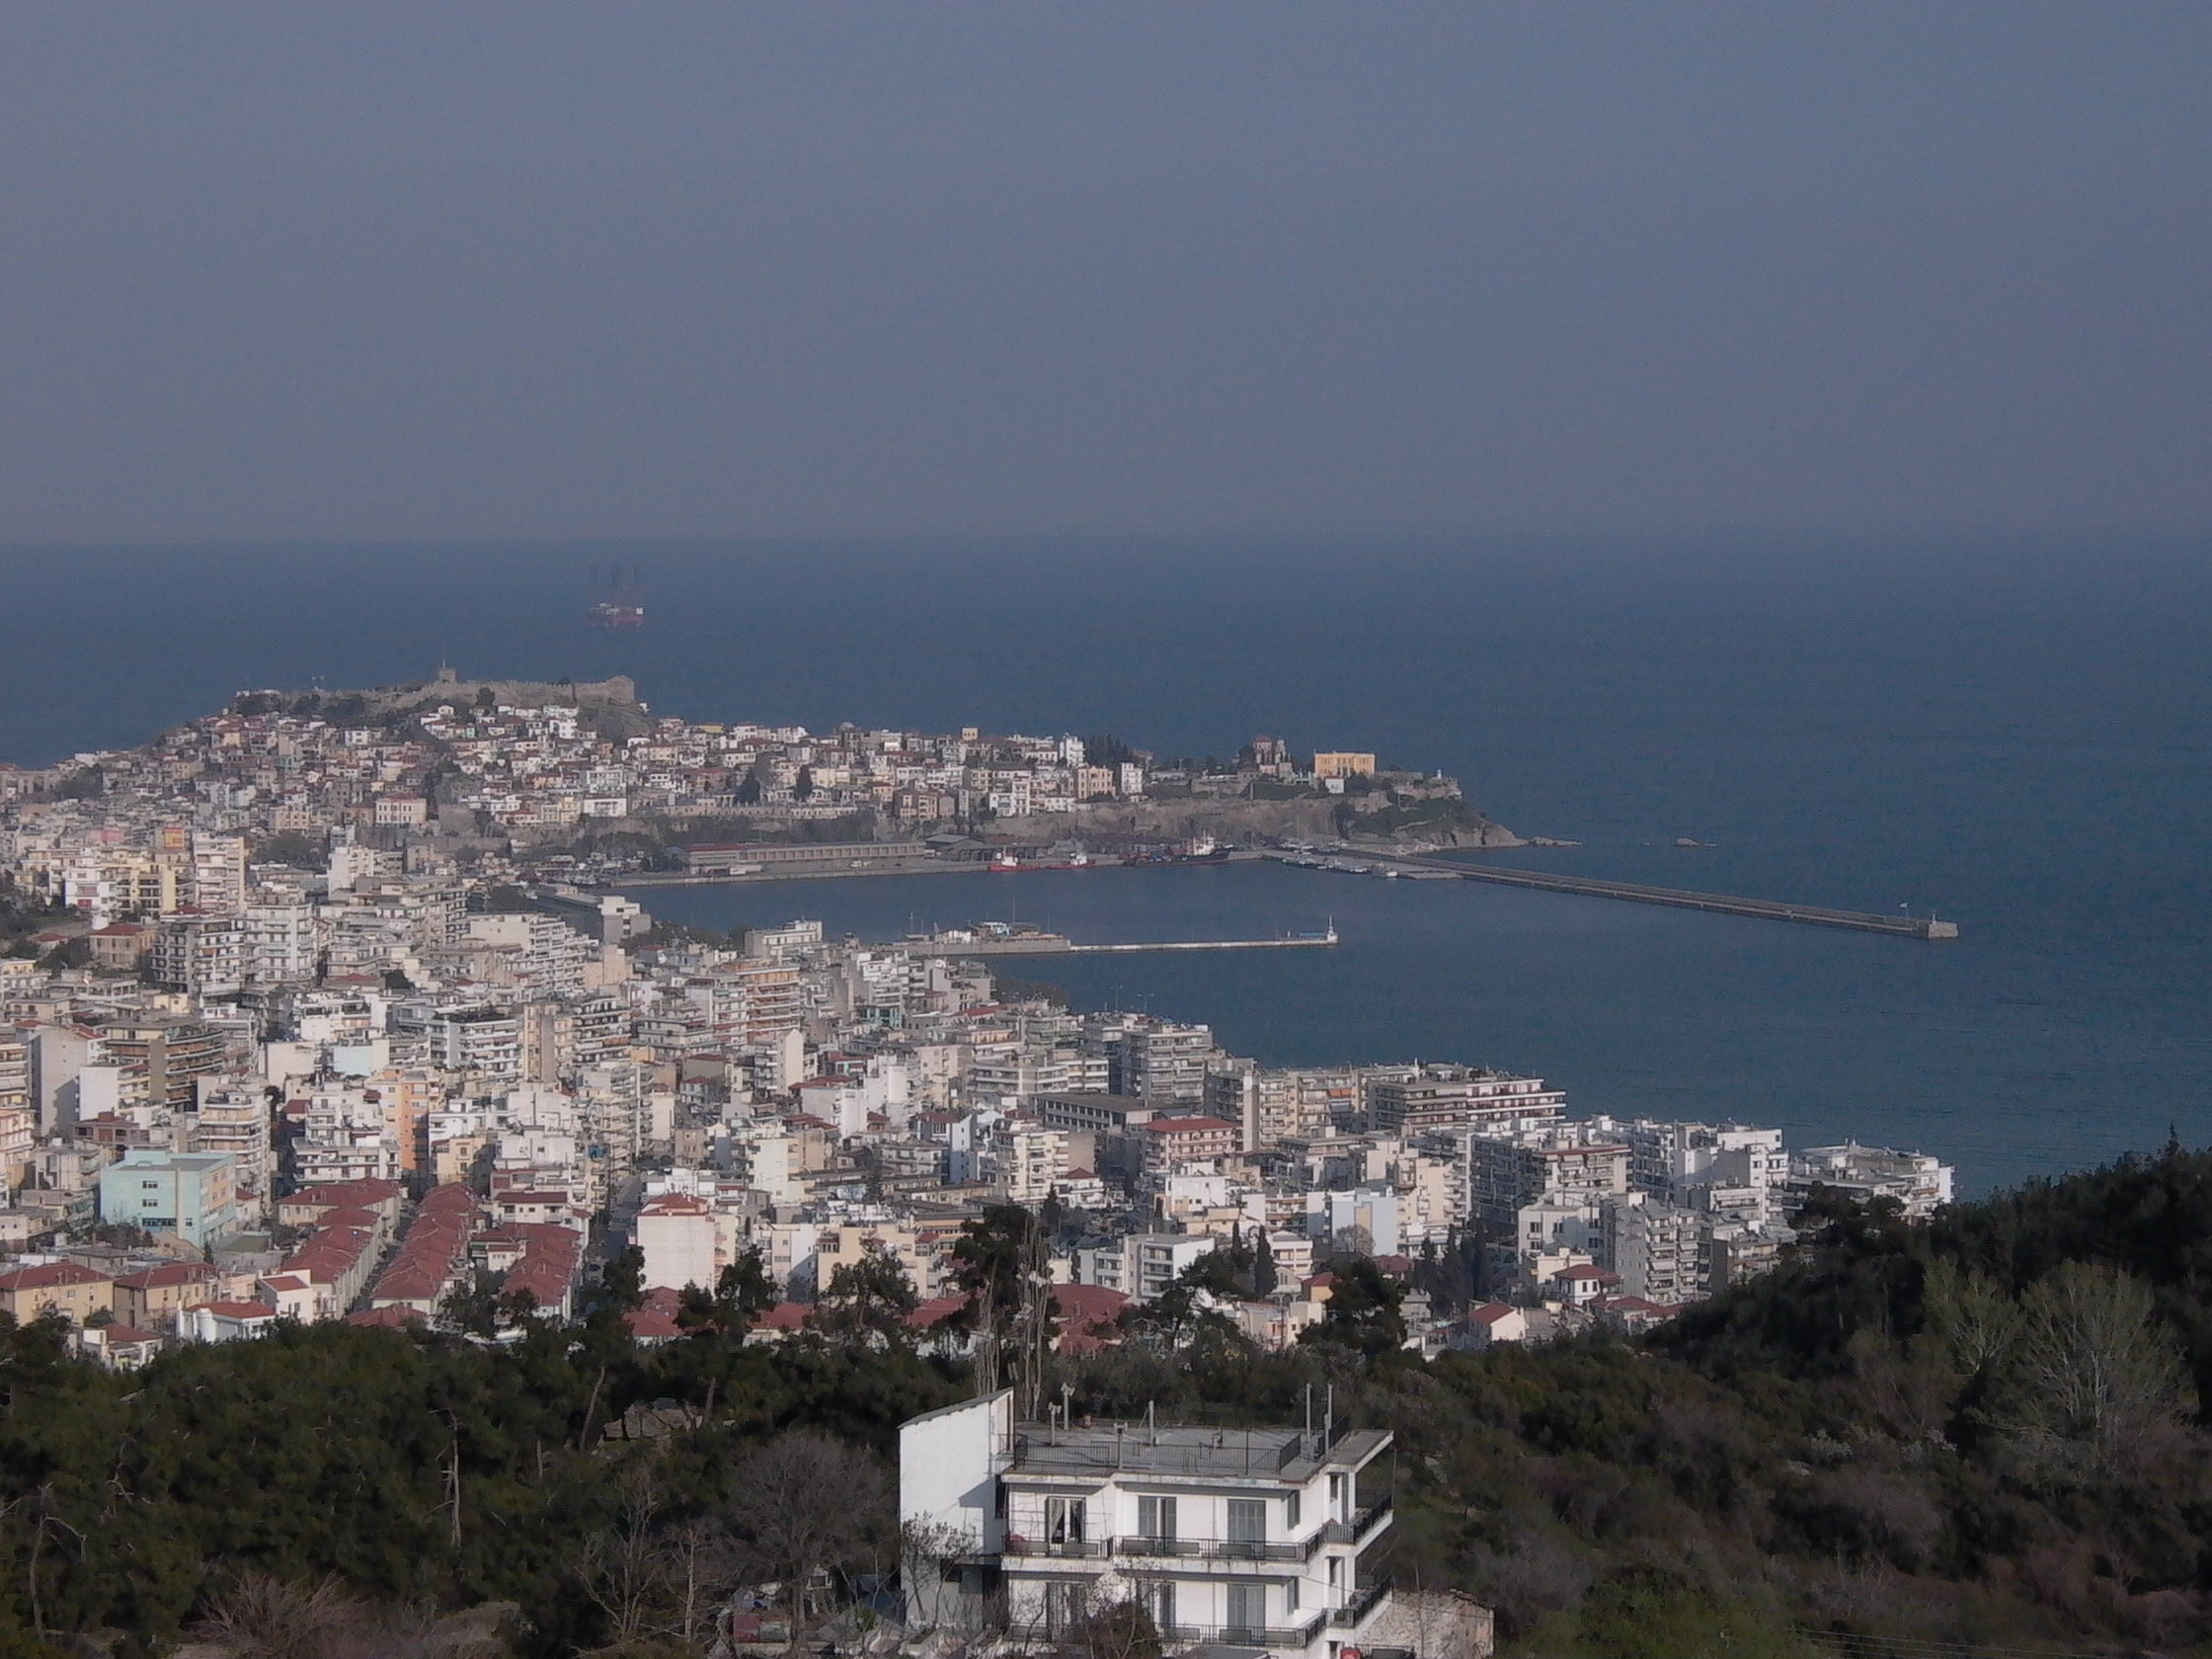   Kavala, Greece. Production platform in the background, Aegean Sea.  